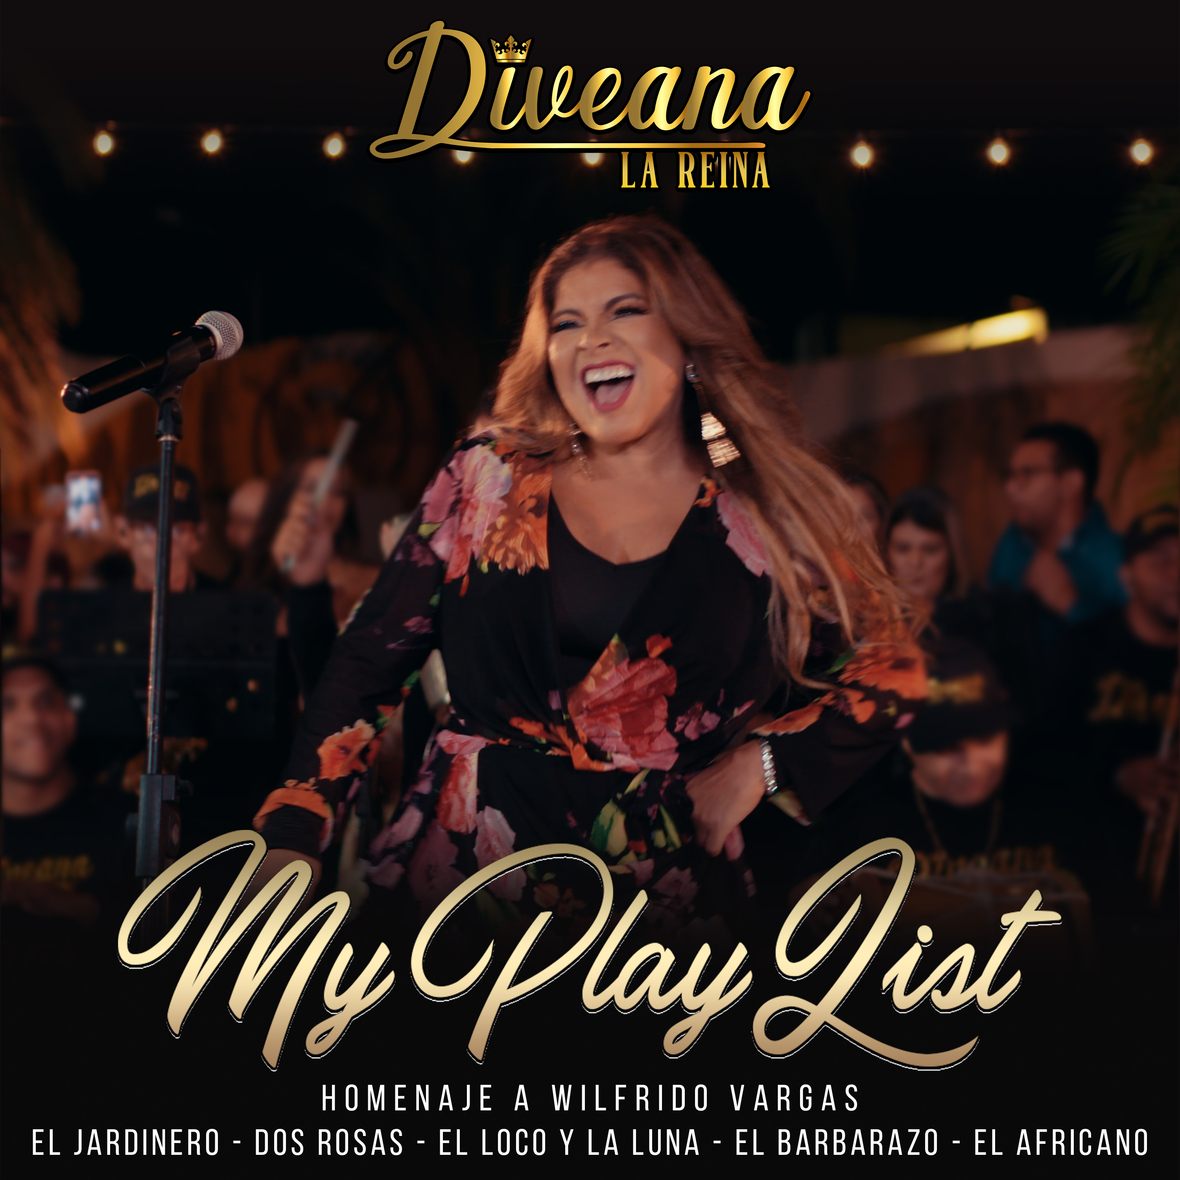 DIVEANA “La Reina” presenta nueva musica “My Playlist”